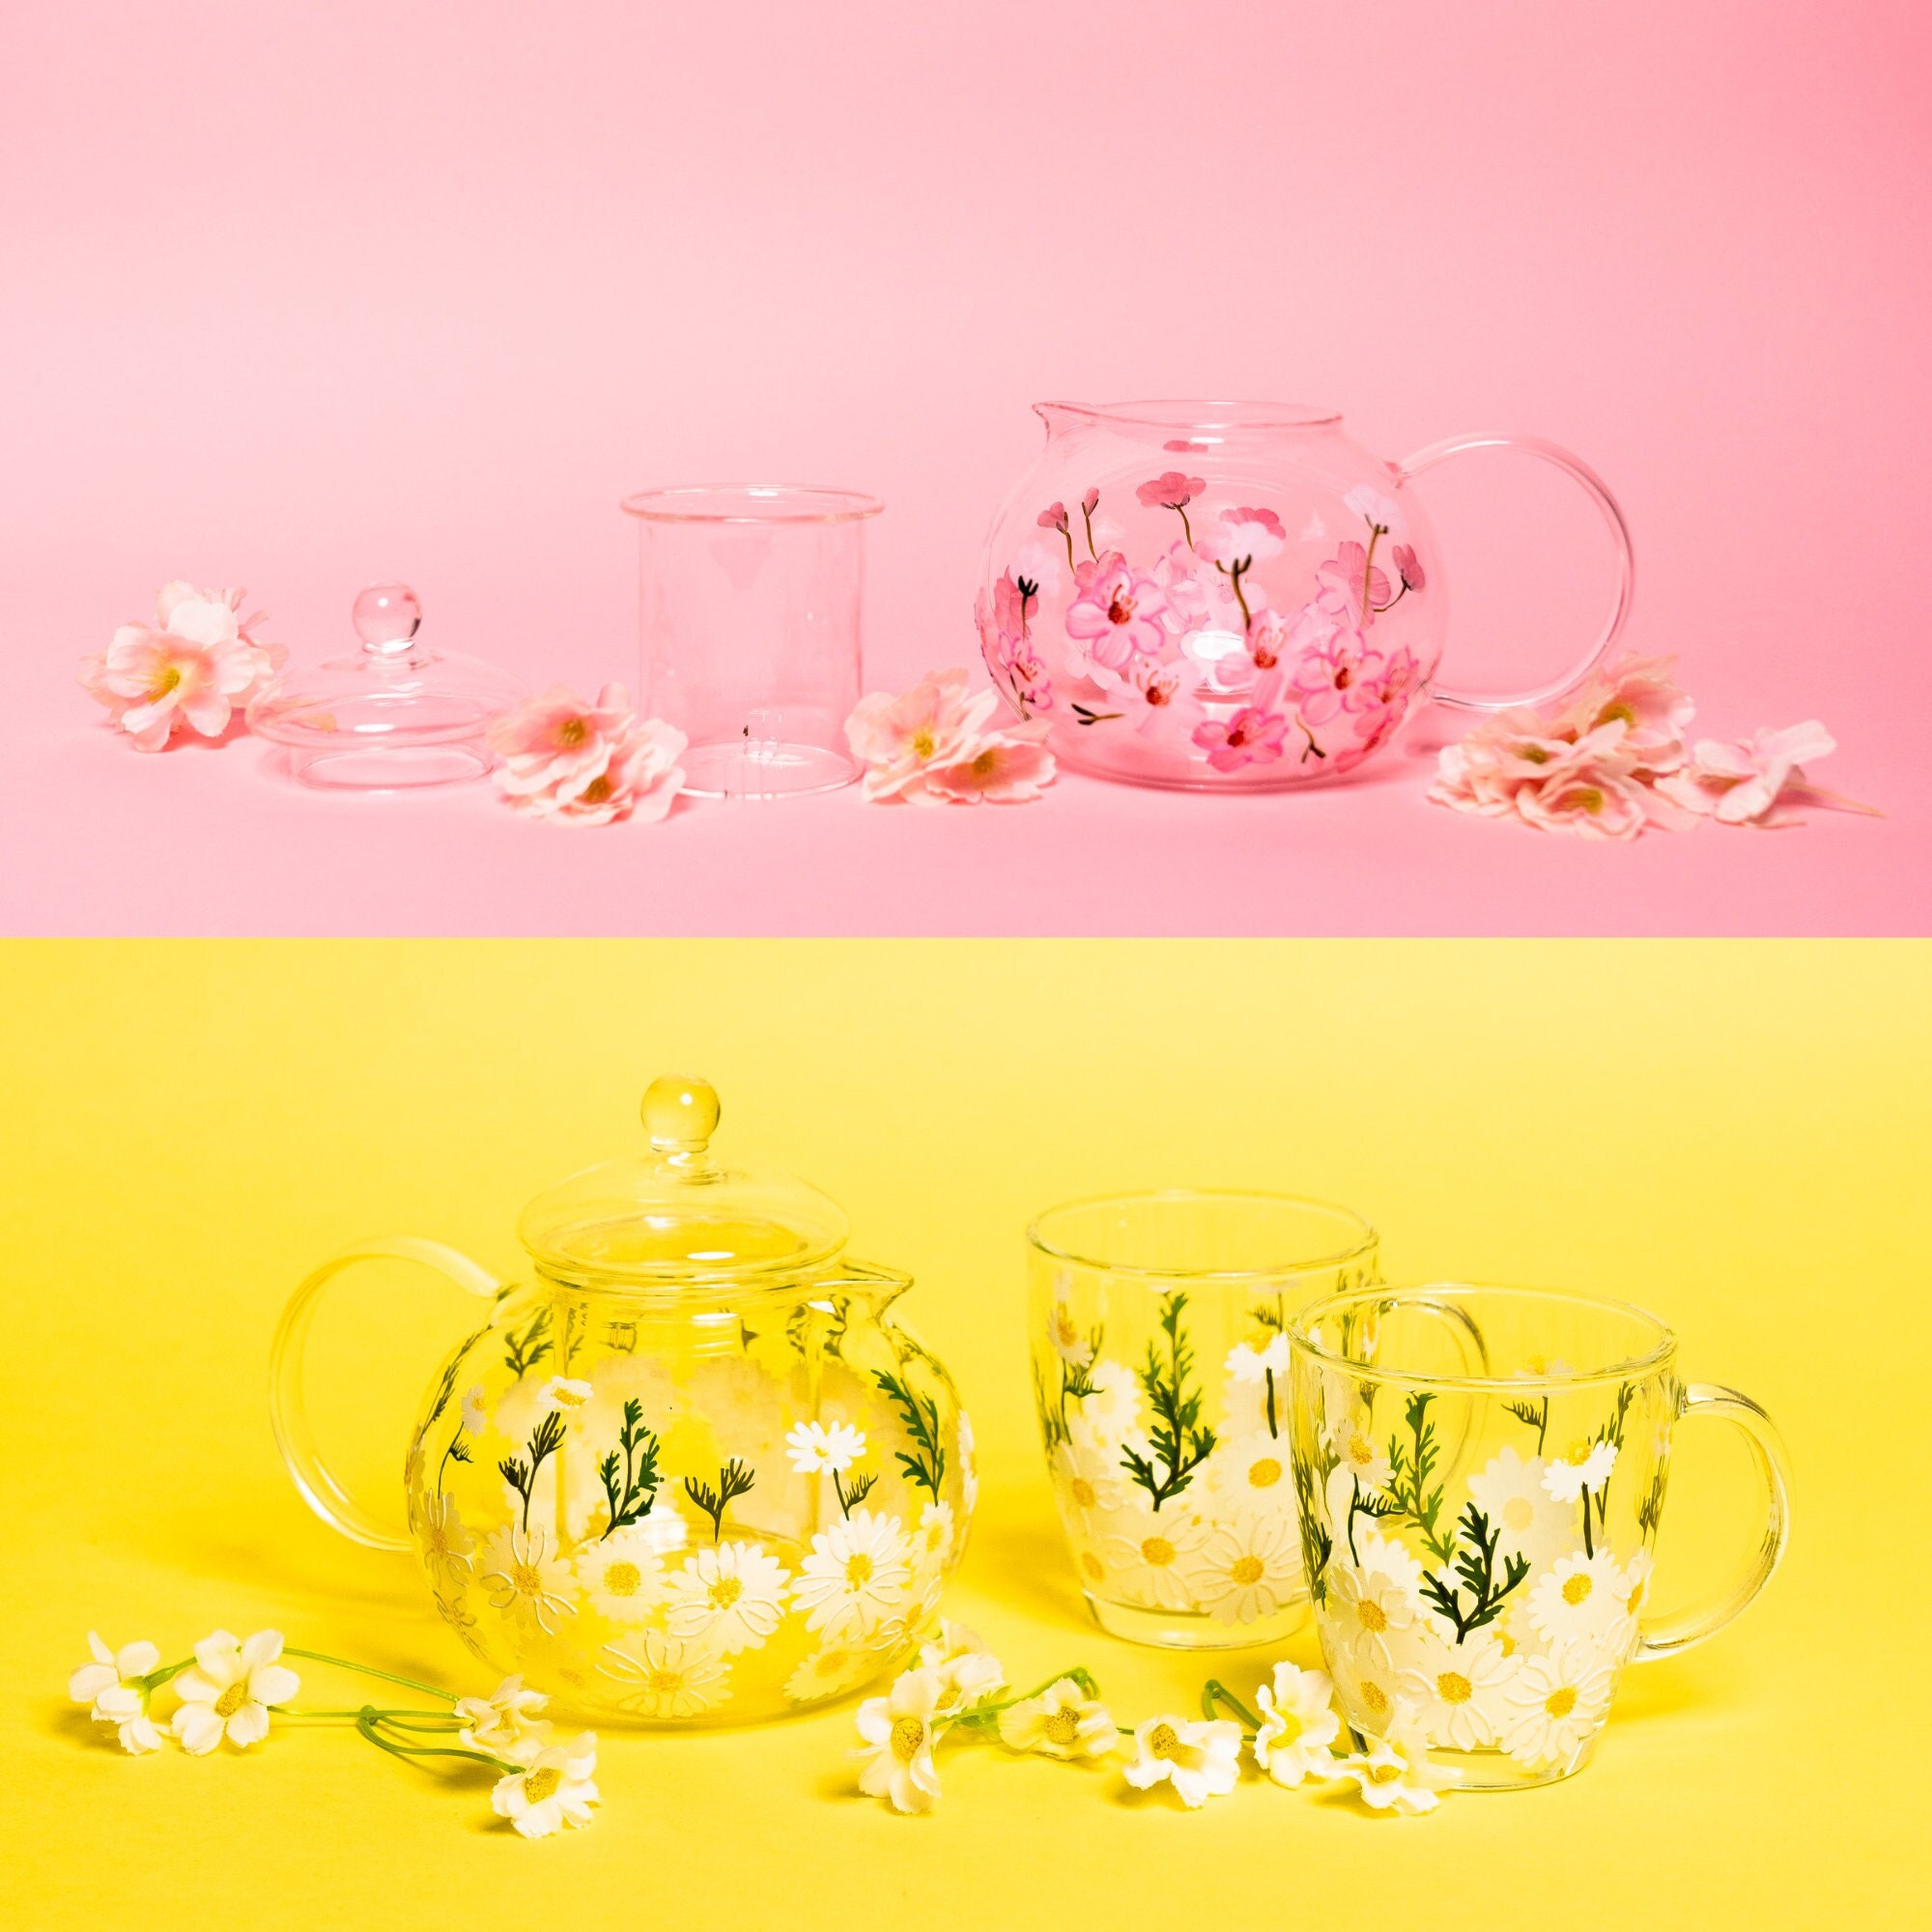 Harper Pink Abstract Ceramic Teapot & Infuser – Blume Organics